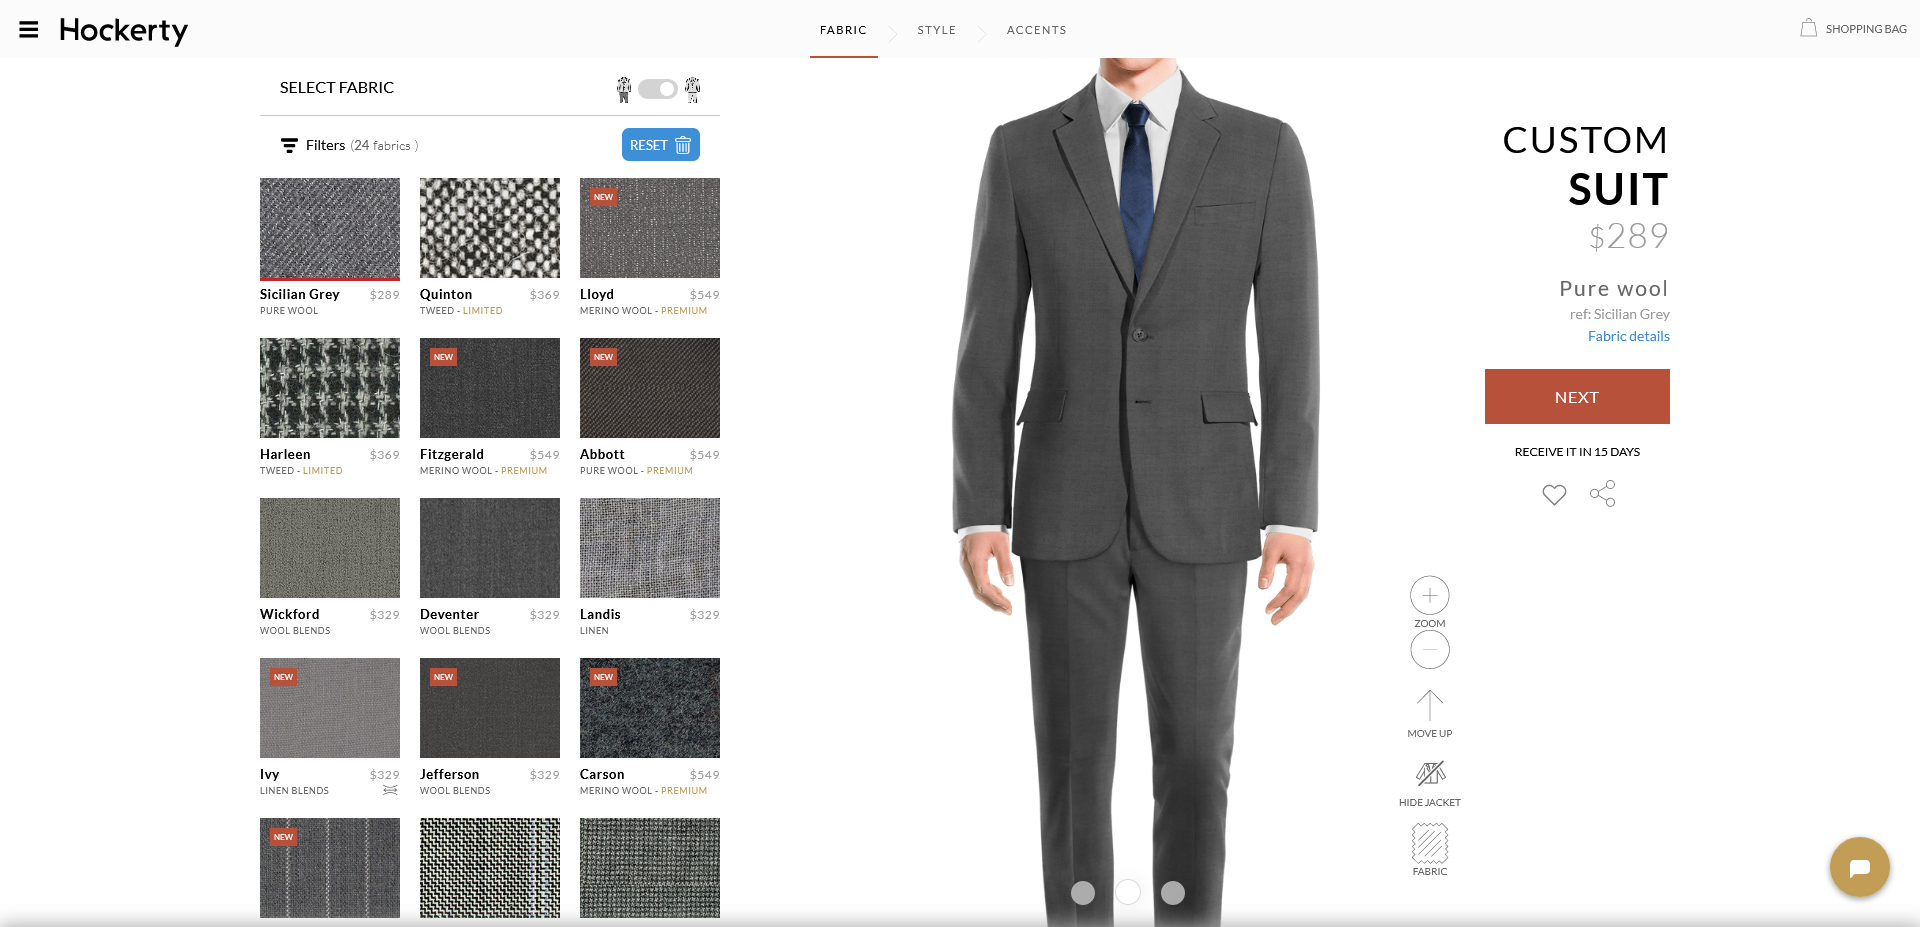 sicilian grey: medium-grey suit fabric